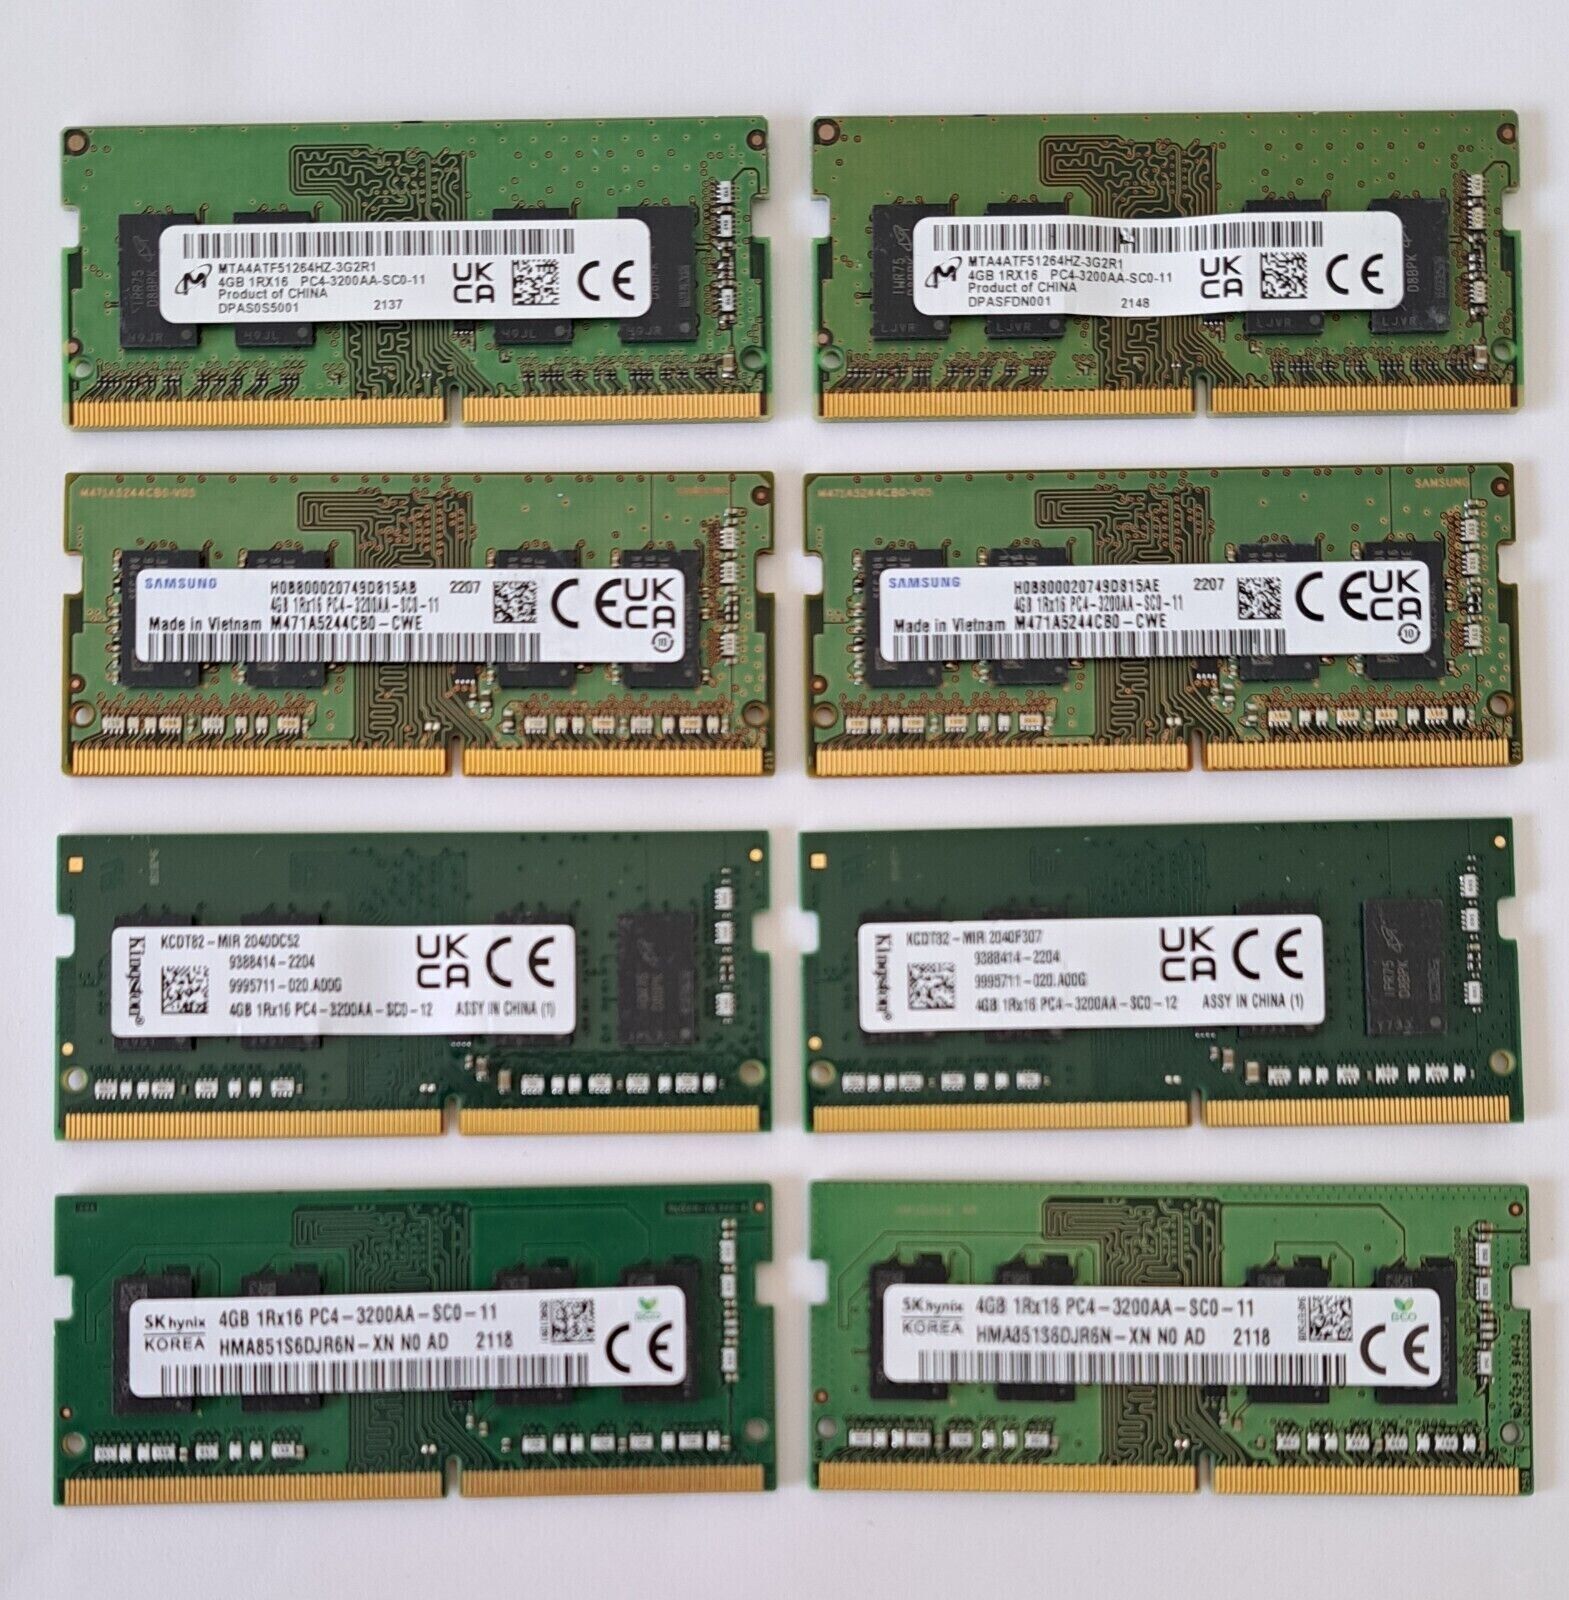 SAMSUNG/SK hynis/Kingston/ Micron 8GB Kit 2x8G PC4-3200AA DDR4 Mixed Brands -AA